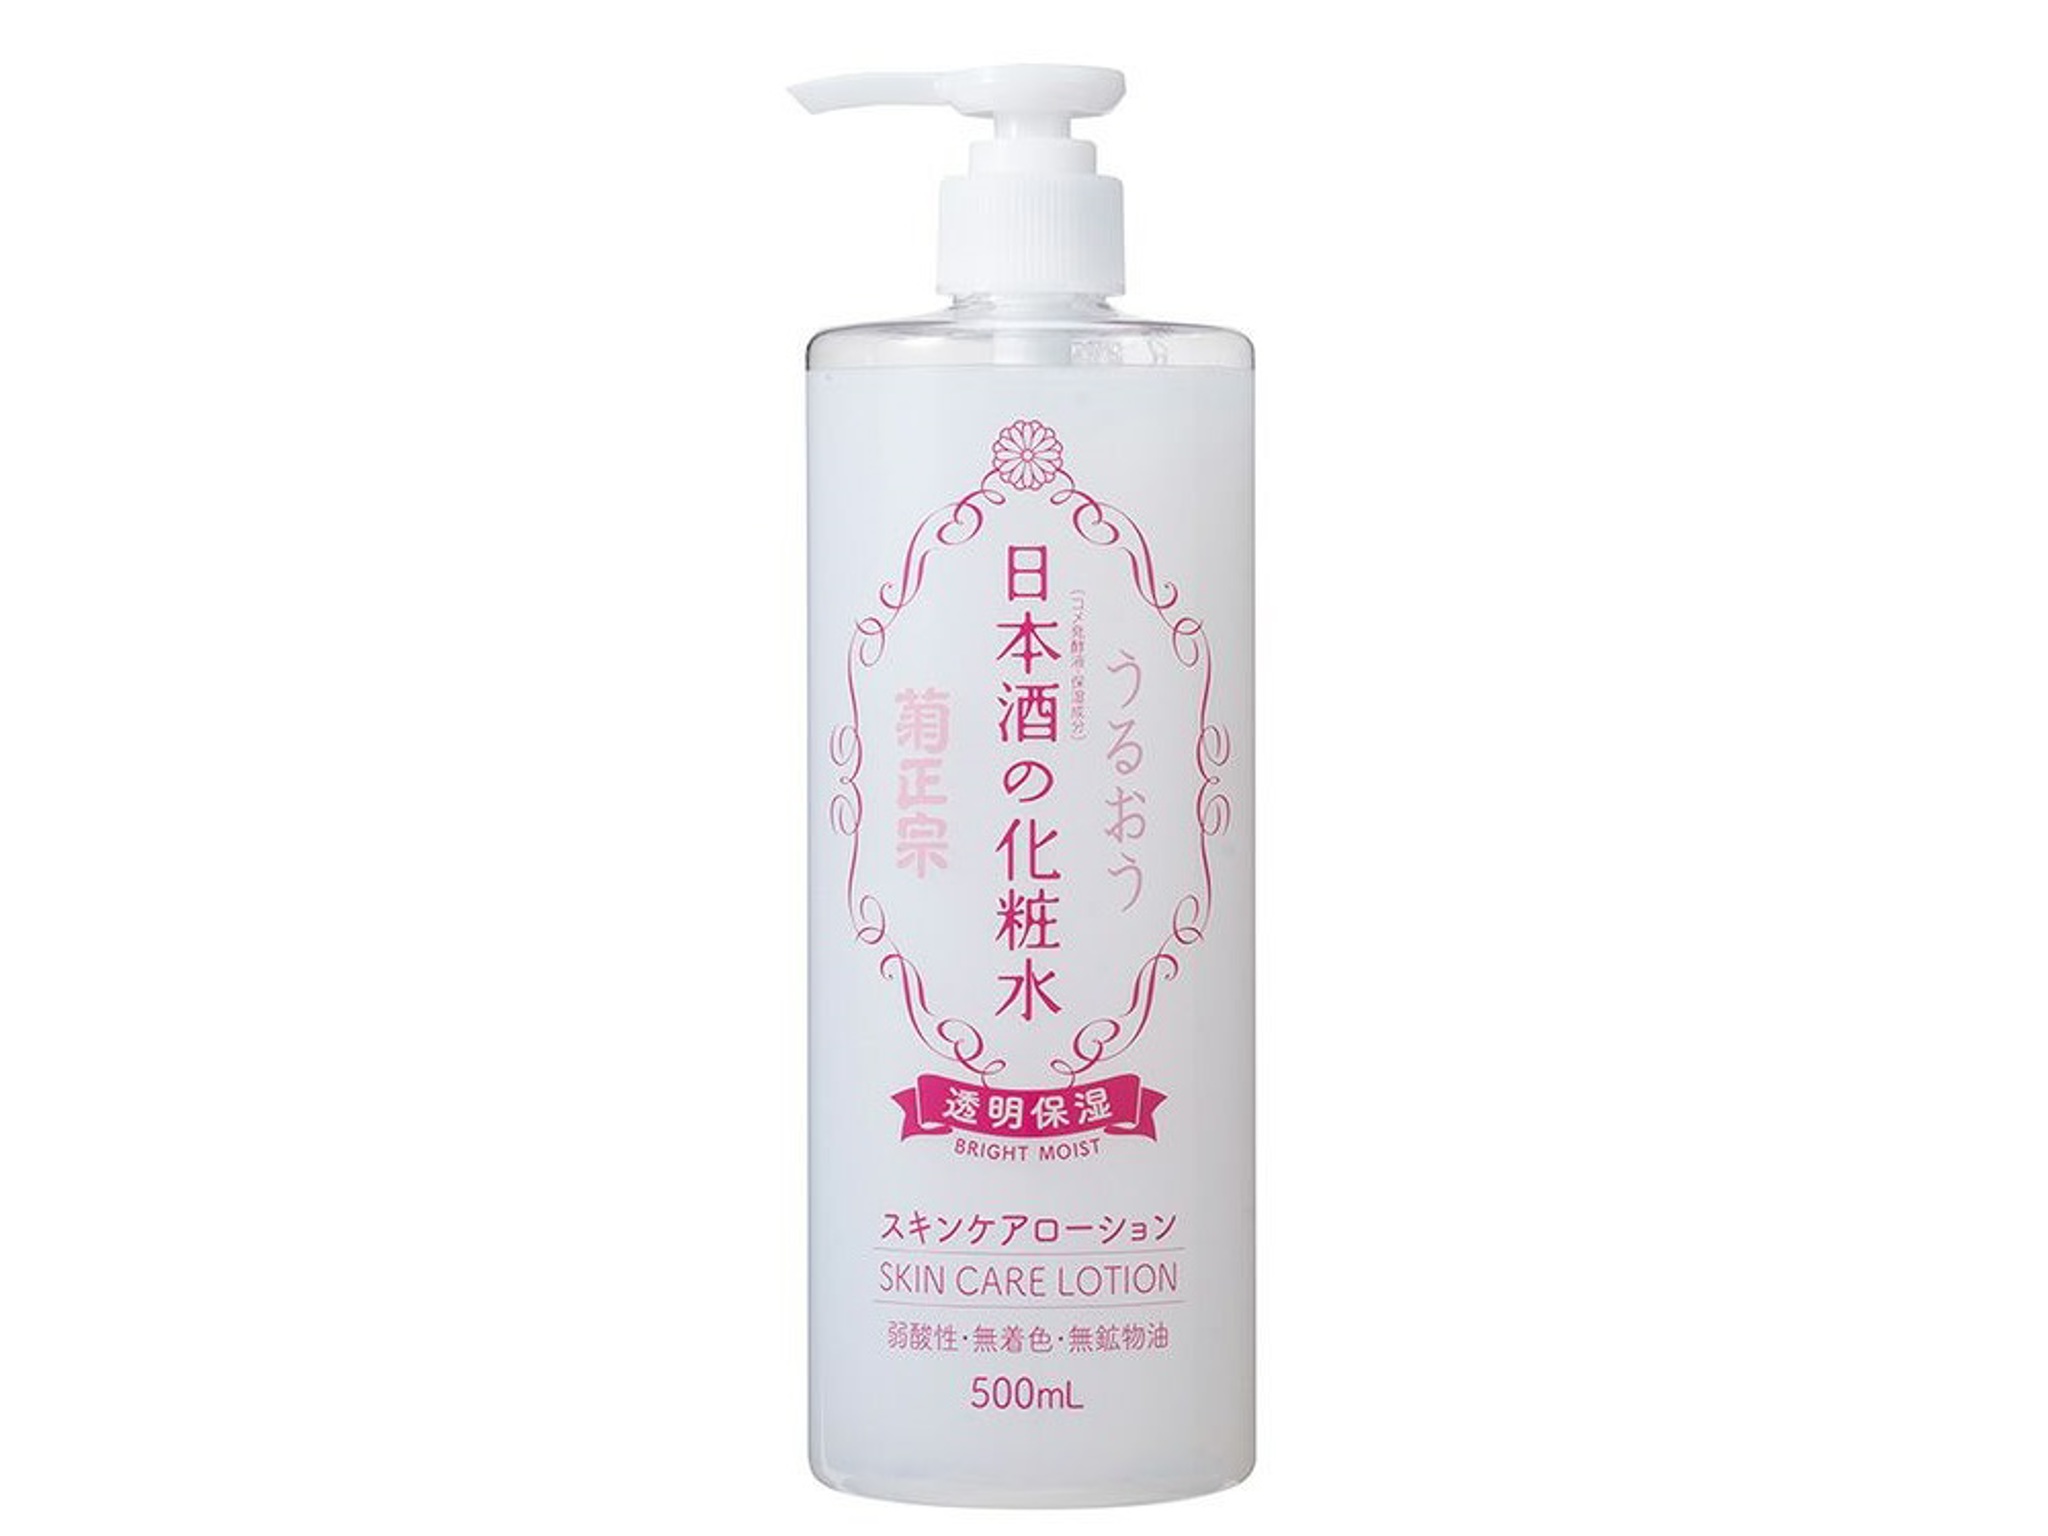 Kikumasamune - Sake Skin Care Lotion - Bright Moist 500ml 3699